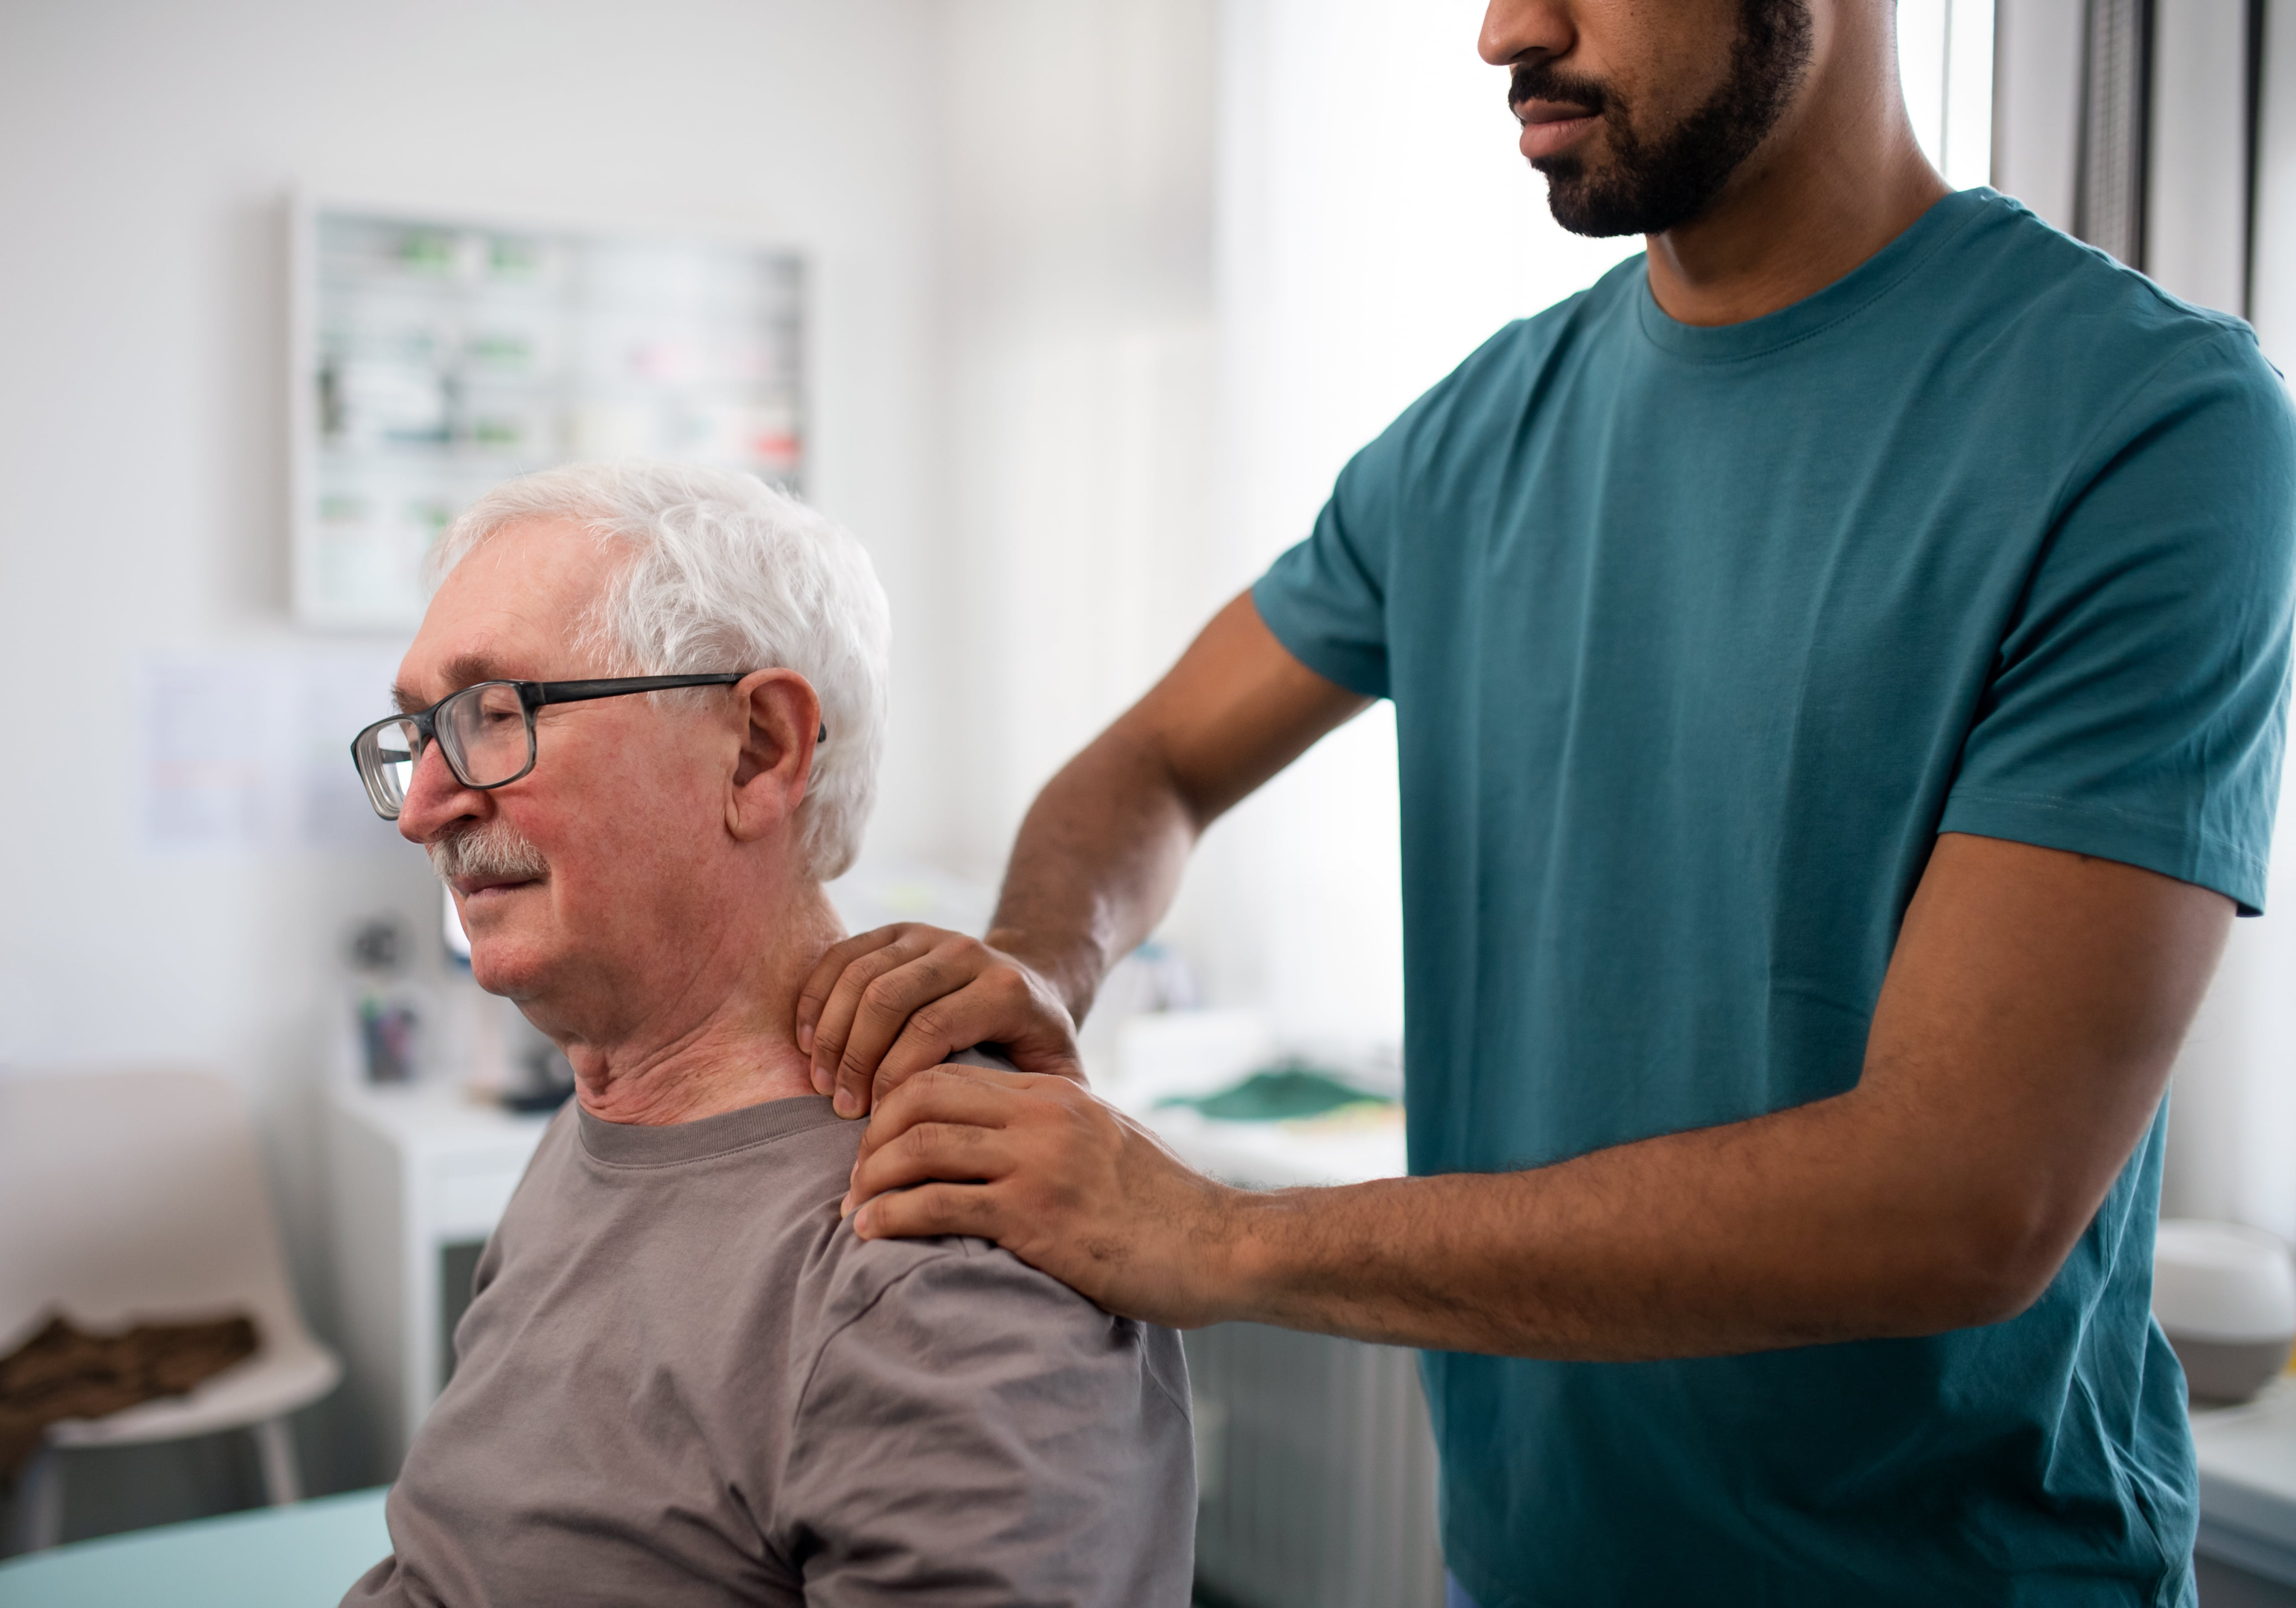 Massage therapy Osteopath Marrickville, shoulder pain in elderly gentlemen. He is sitting having massage on left shoulder.